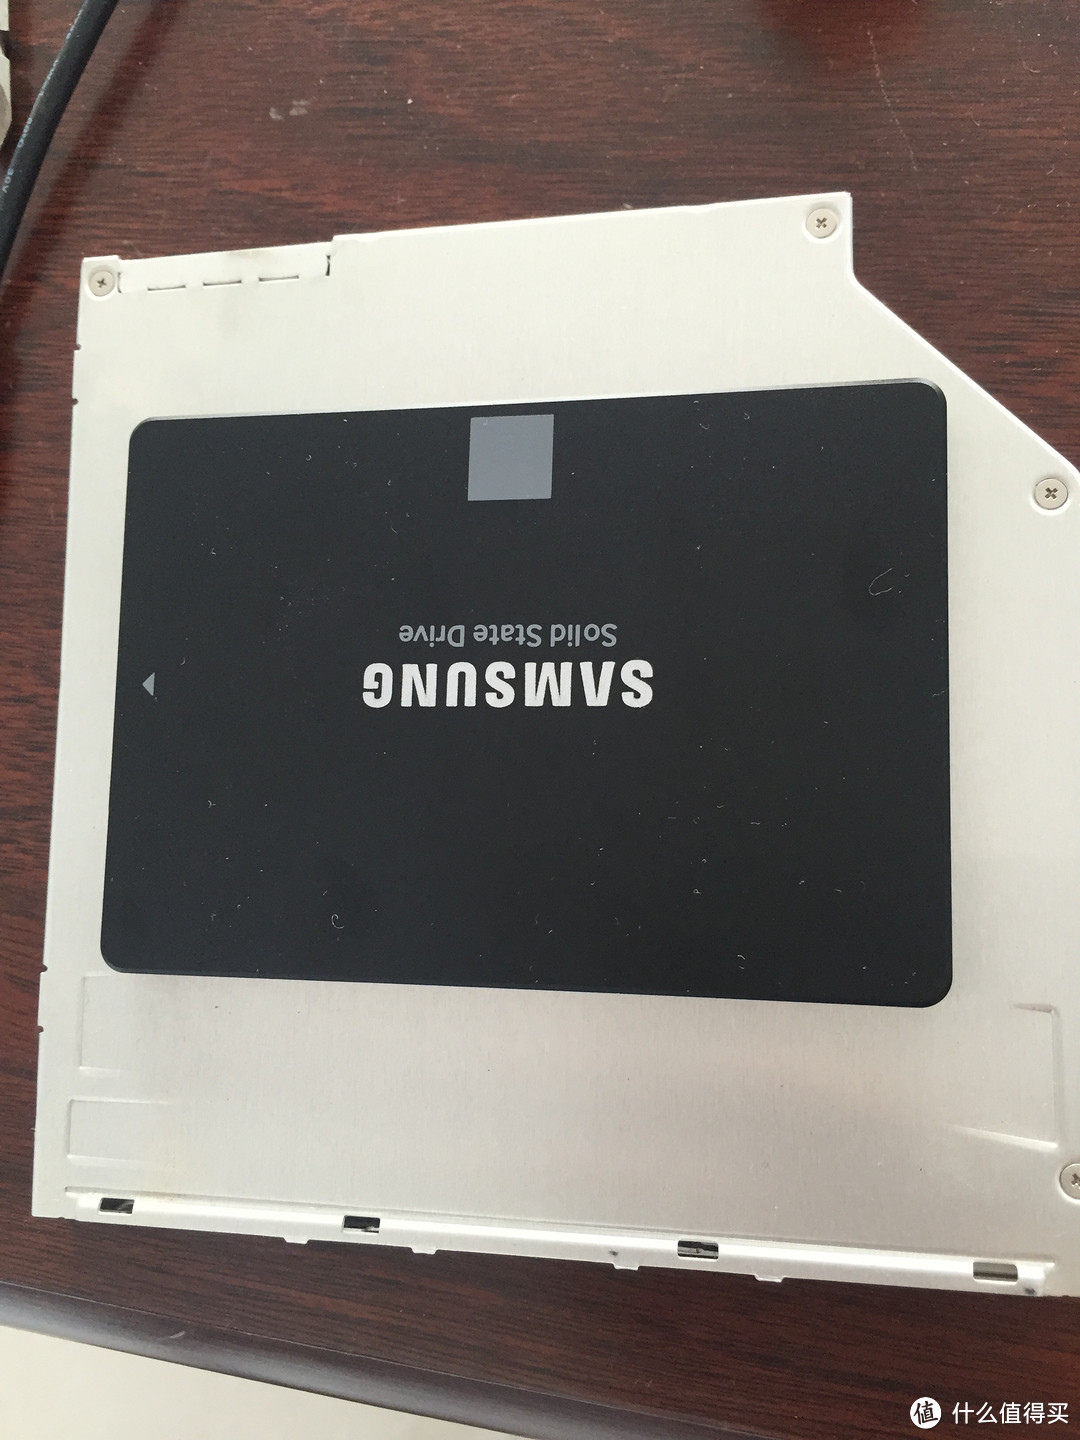 DELL XPS M1330 加装SSD 焕发第二春